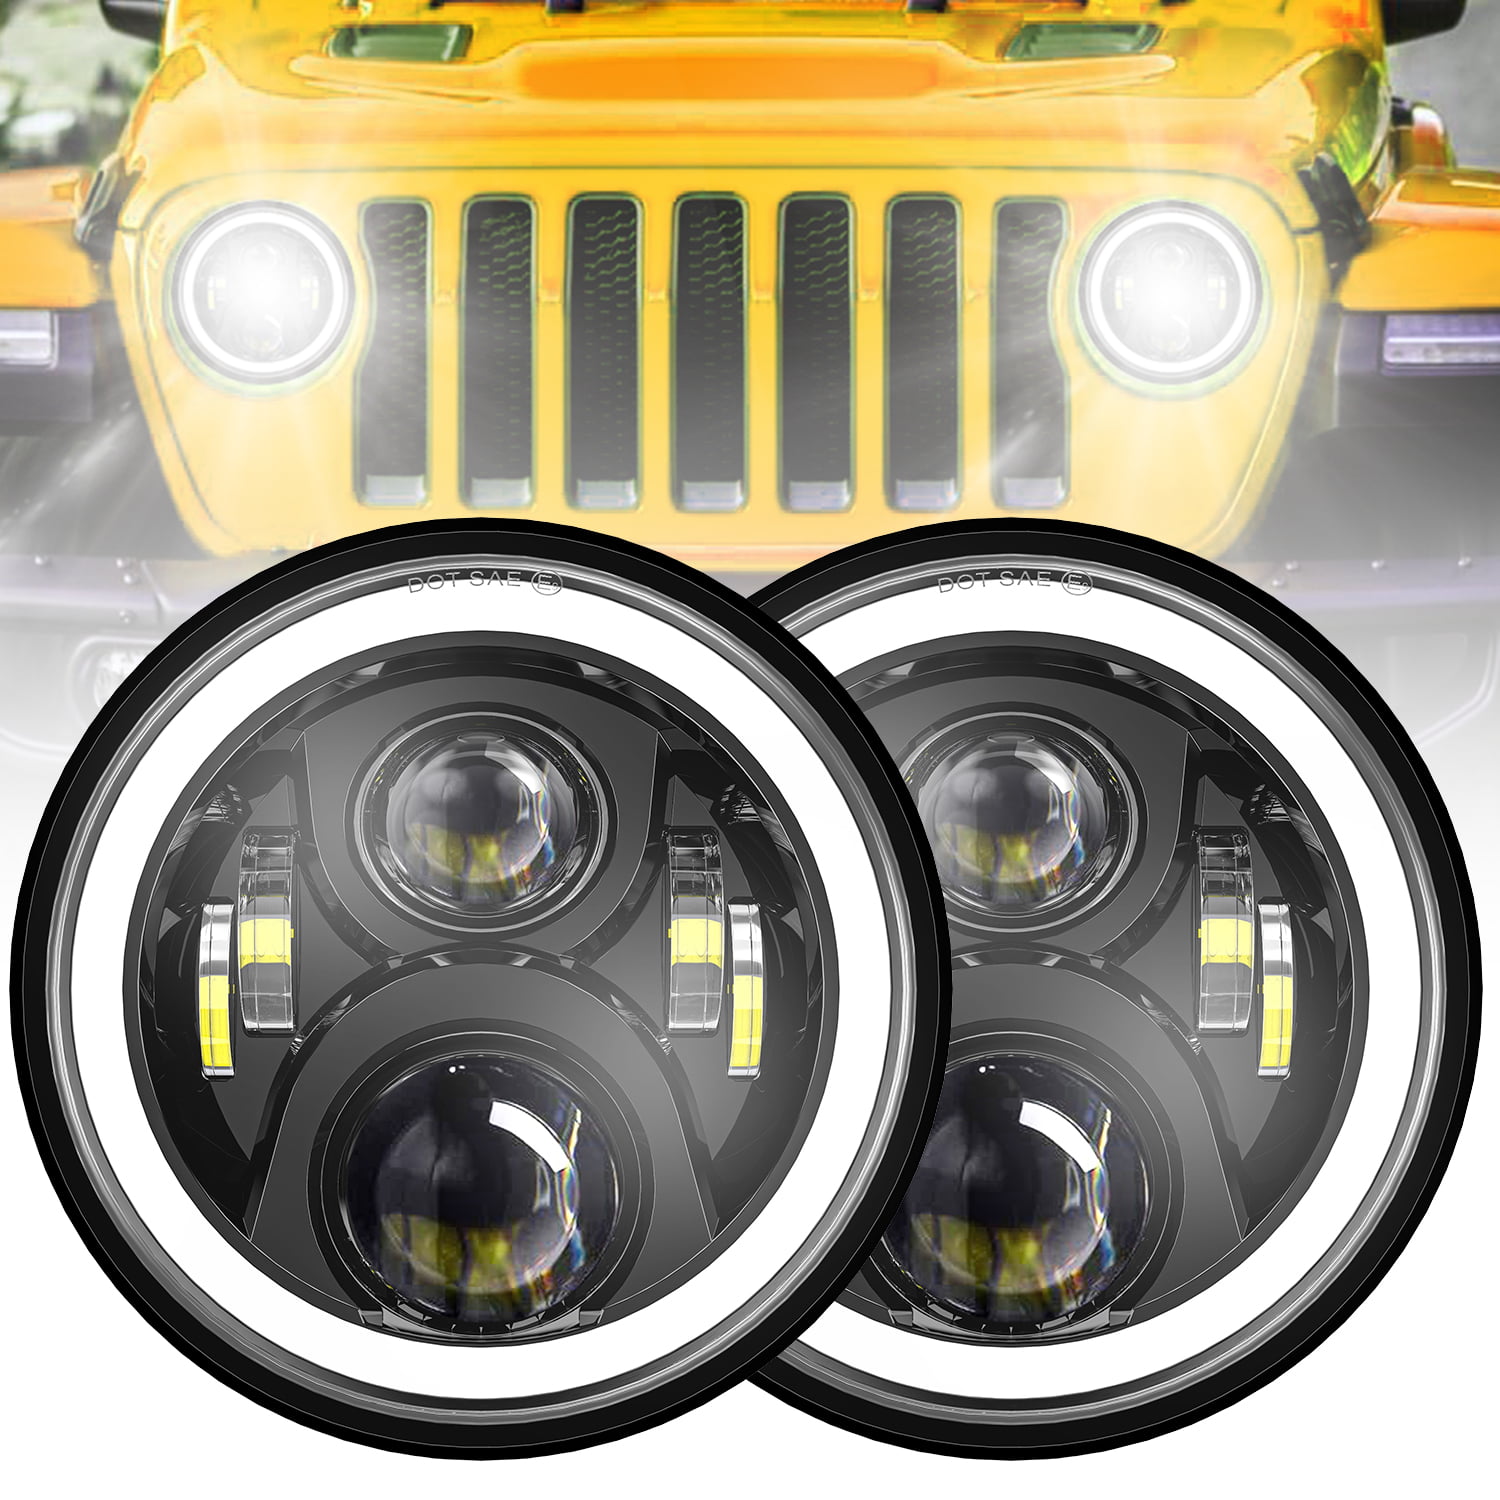 2Pcs 7 Inch Round LED Headlights for Jeep Wrangler JK TJ LJ CJ Hummer H1 H2  High Low Beam Headlight w/ DRL White Halo and Amber Turn Signal Waterproof  Car Light H4